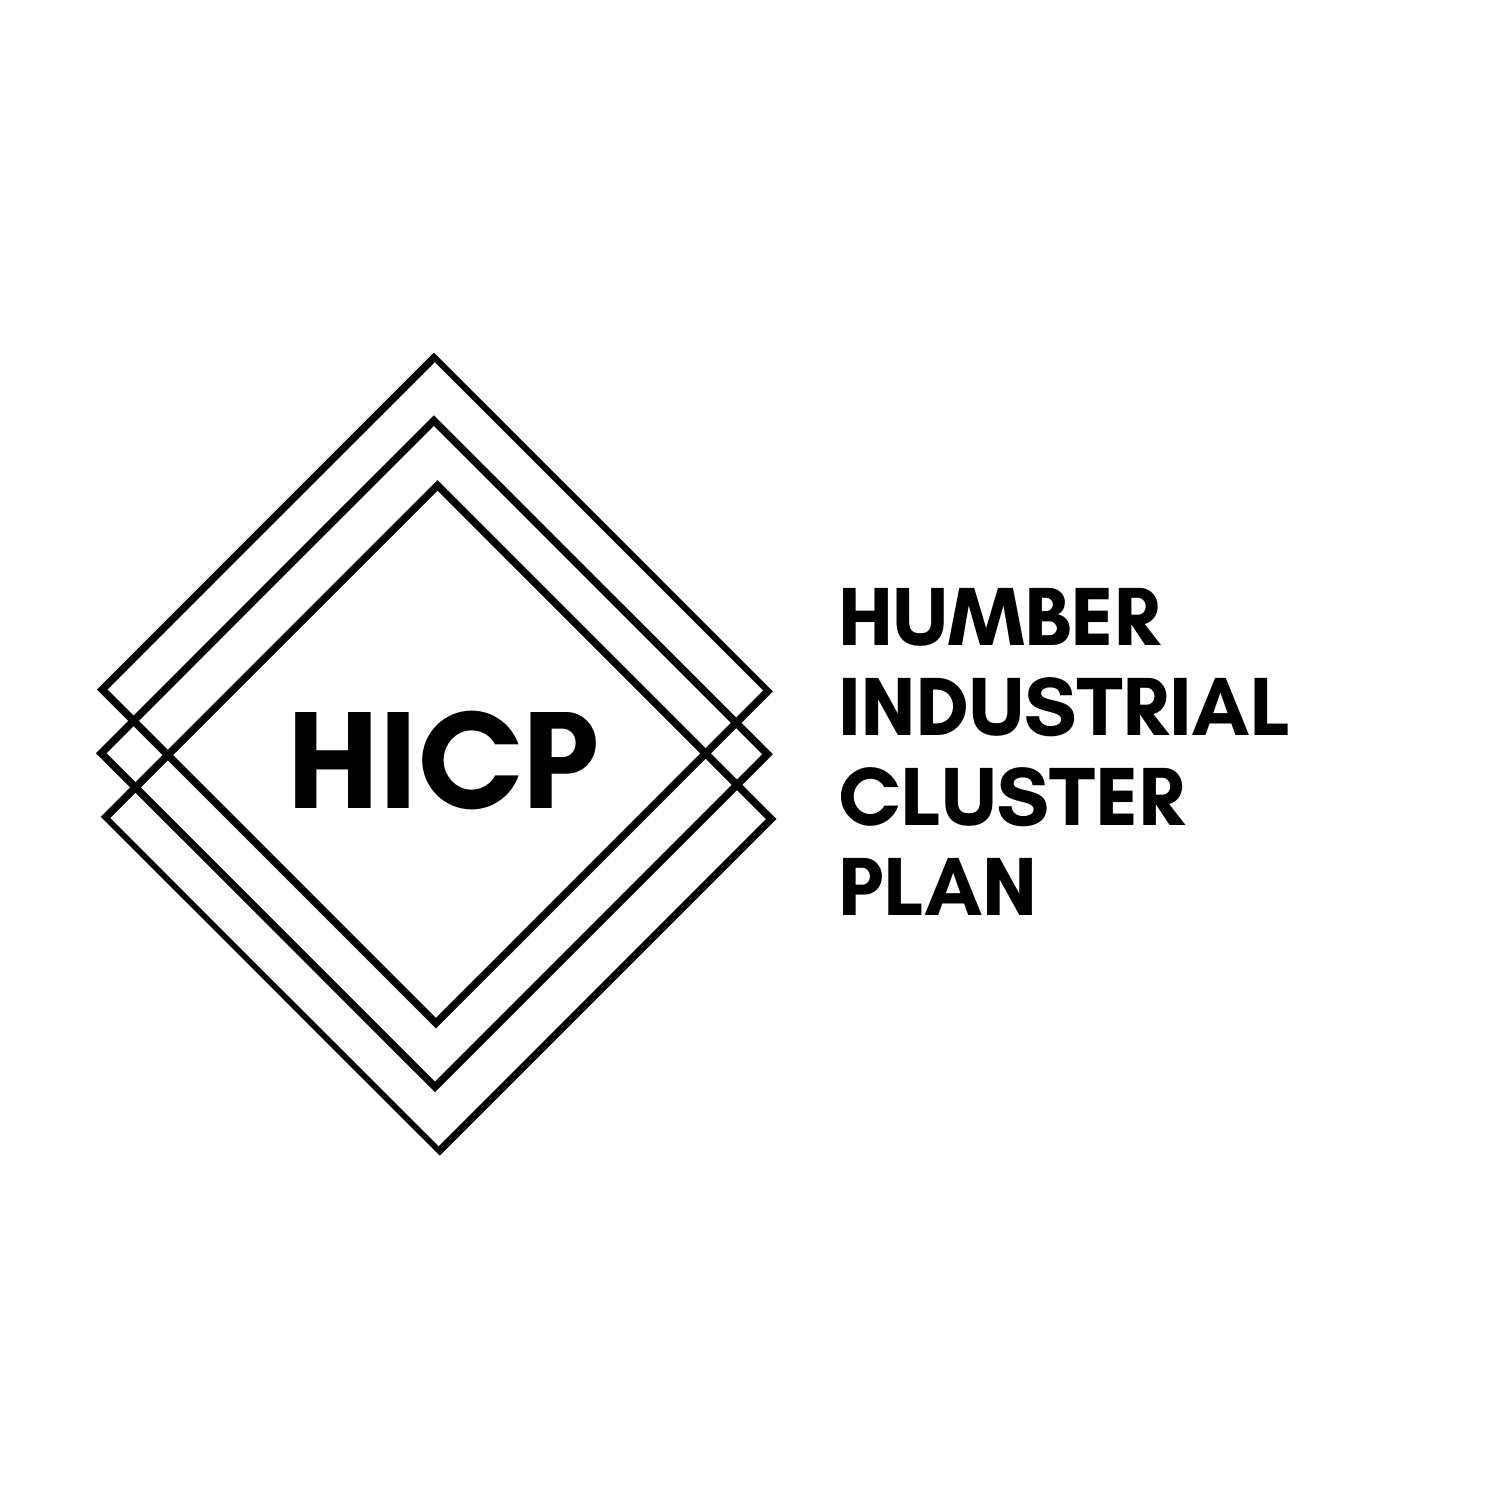 Humber Industrial Cluster plan